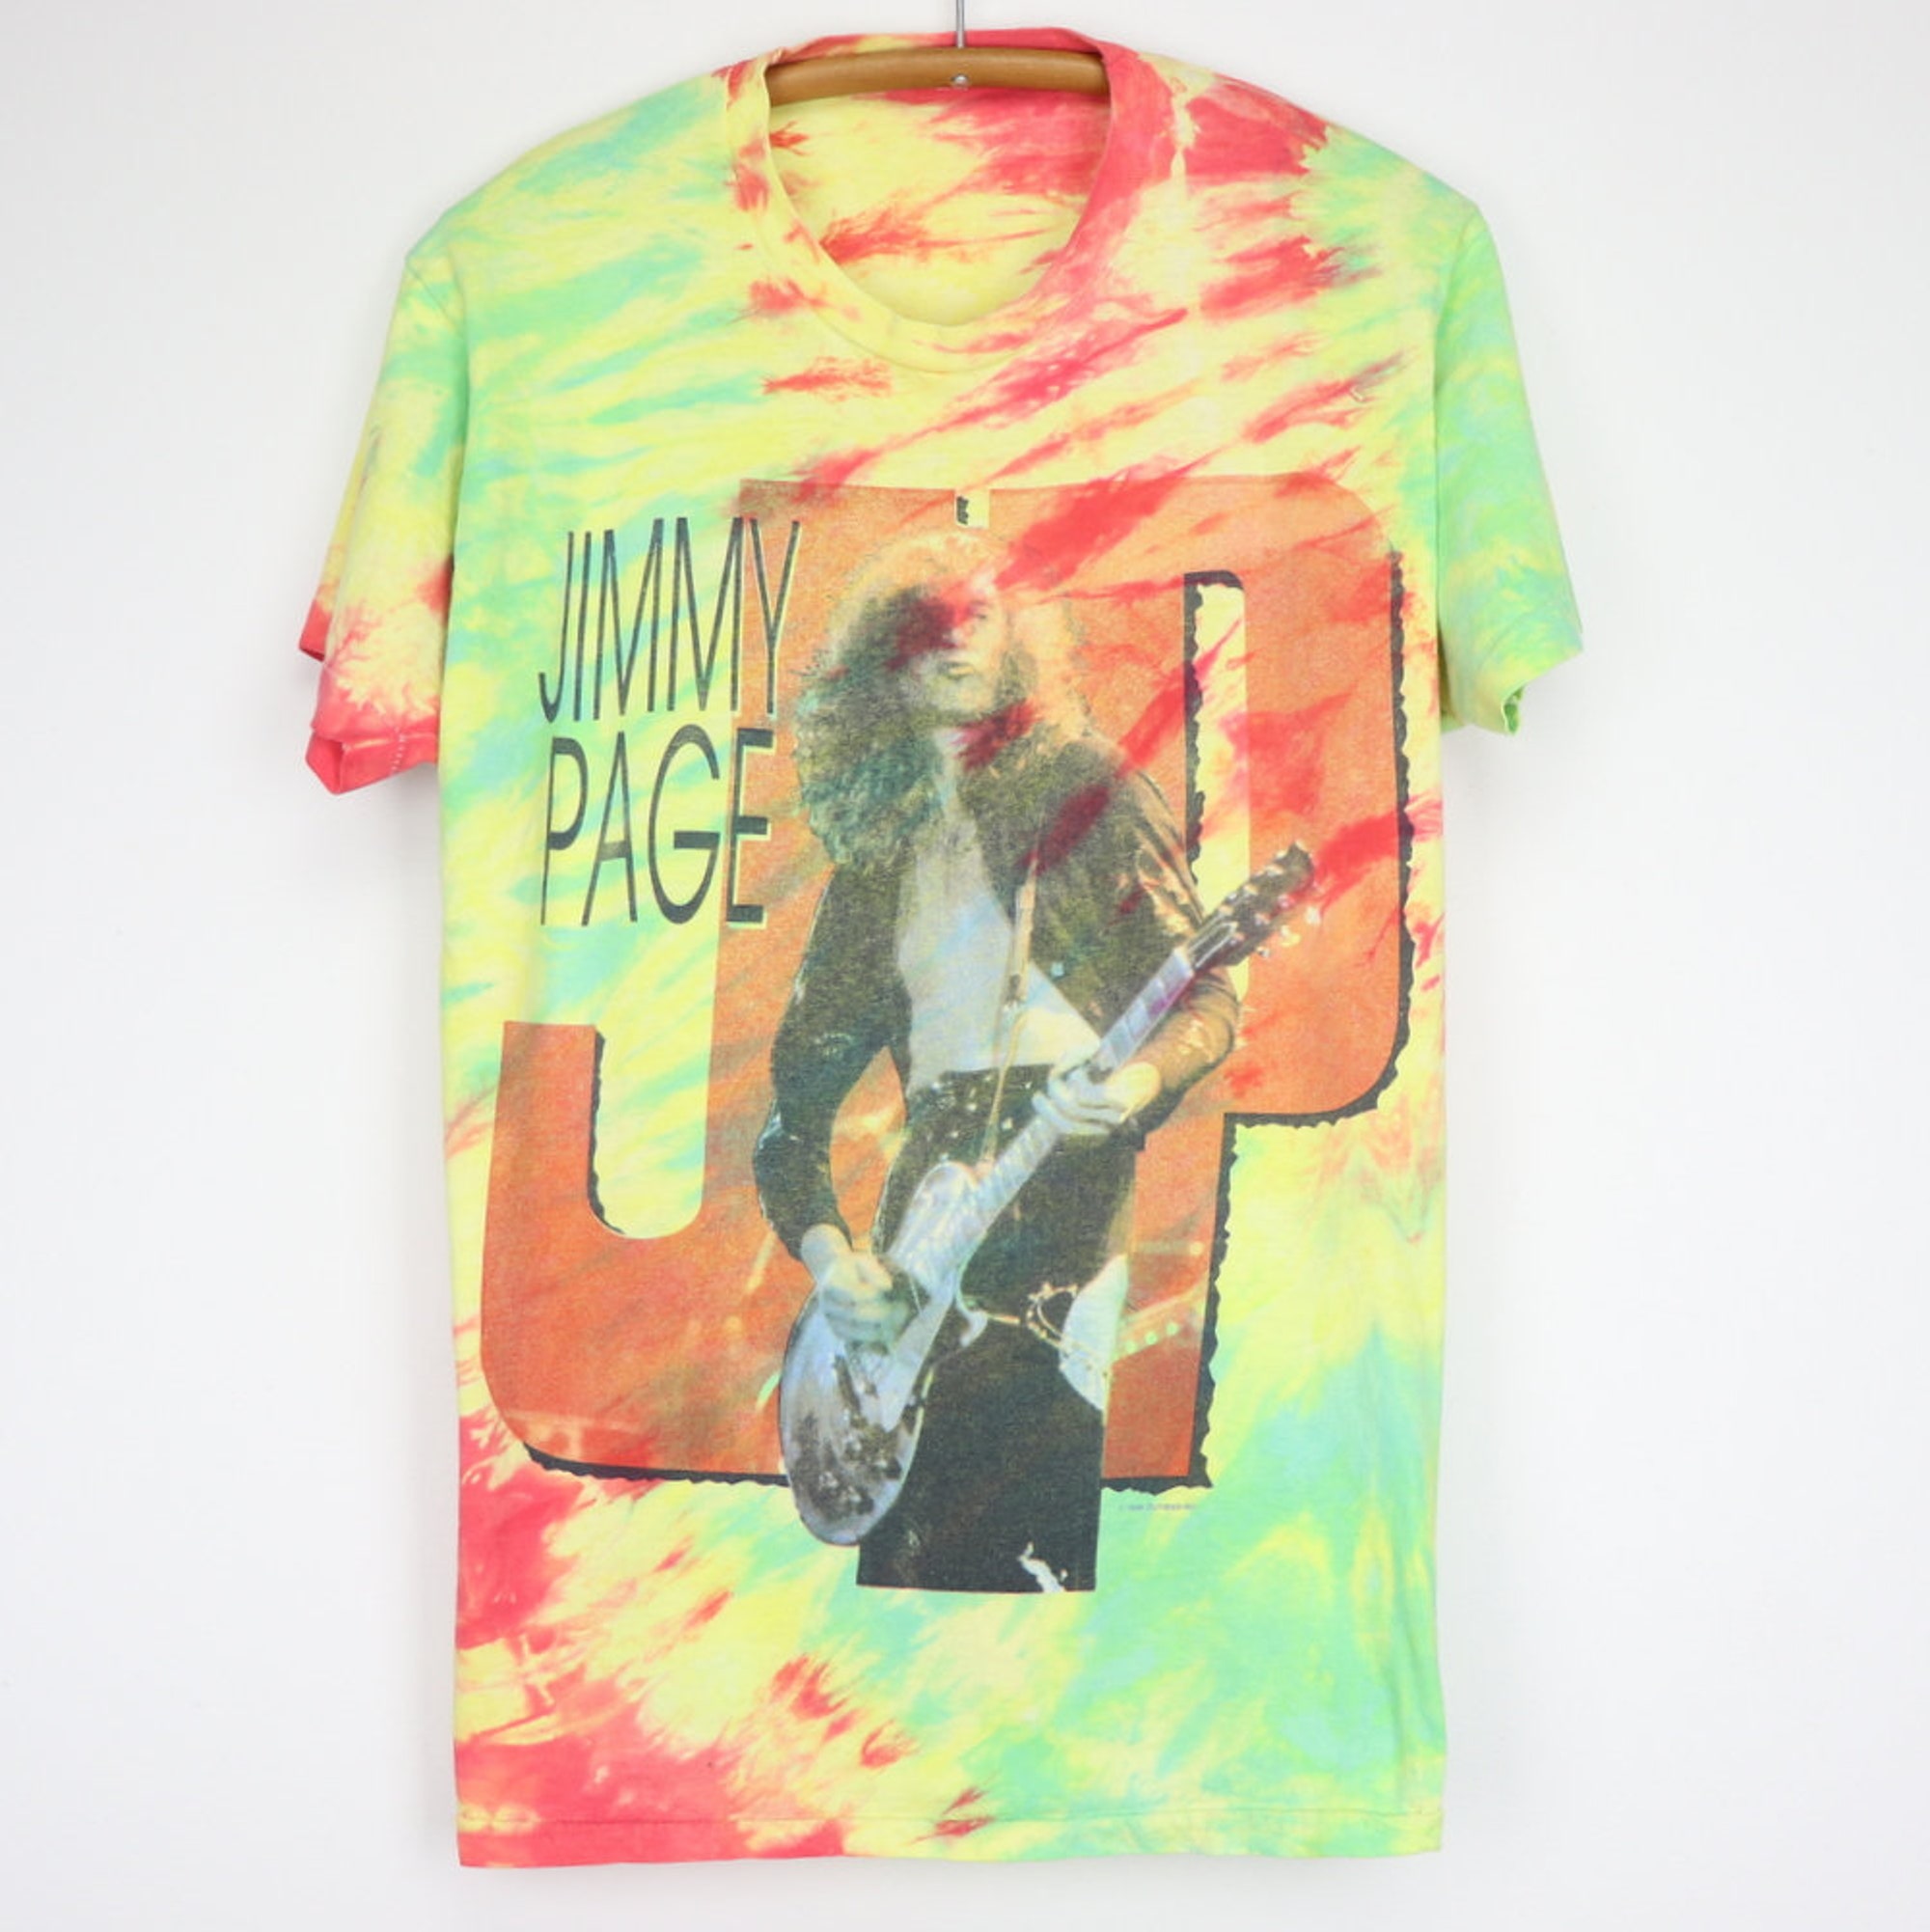 vintage 1988 Jimmy Page Shirt